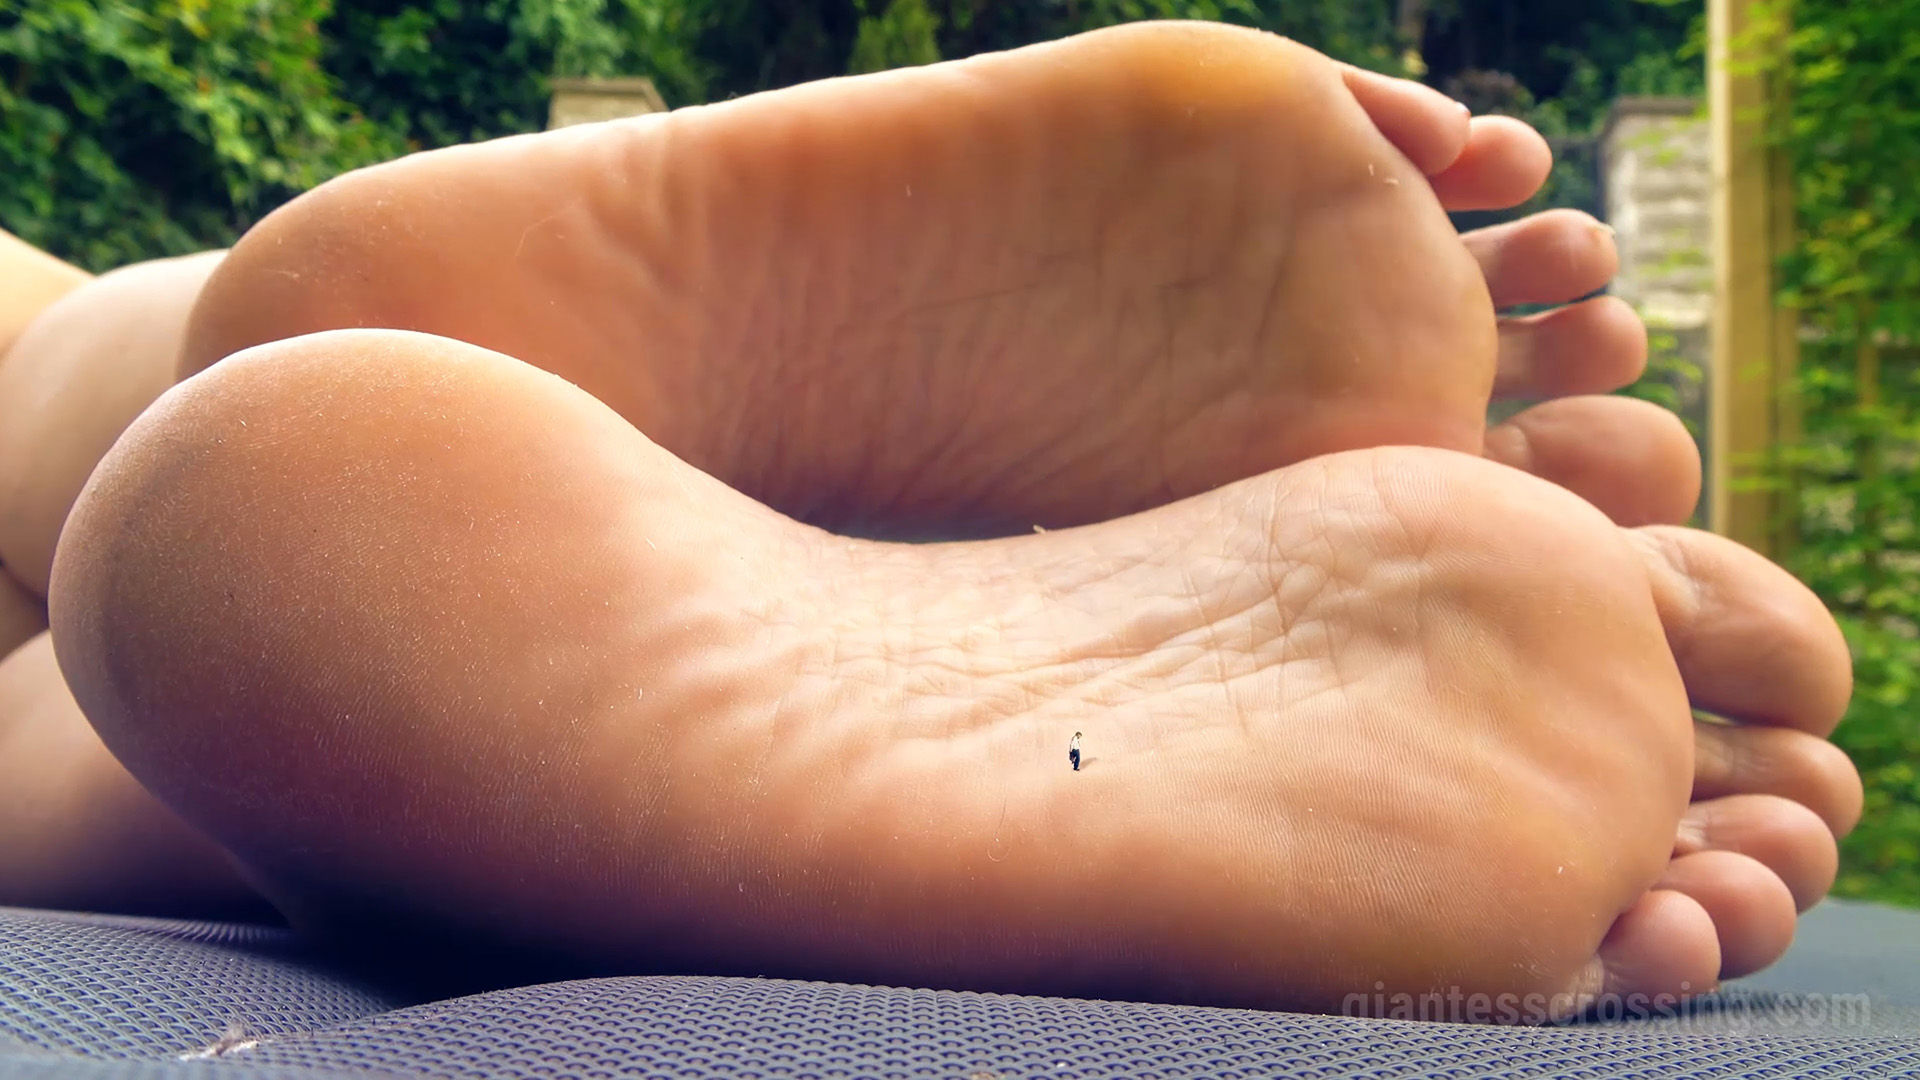 Giantess feet vr